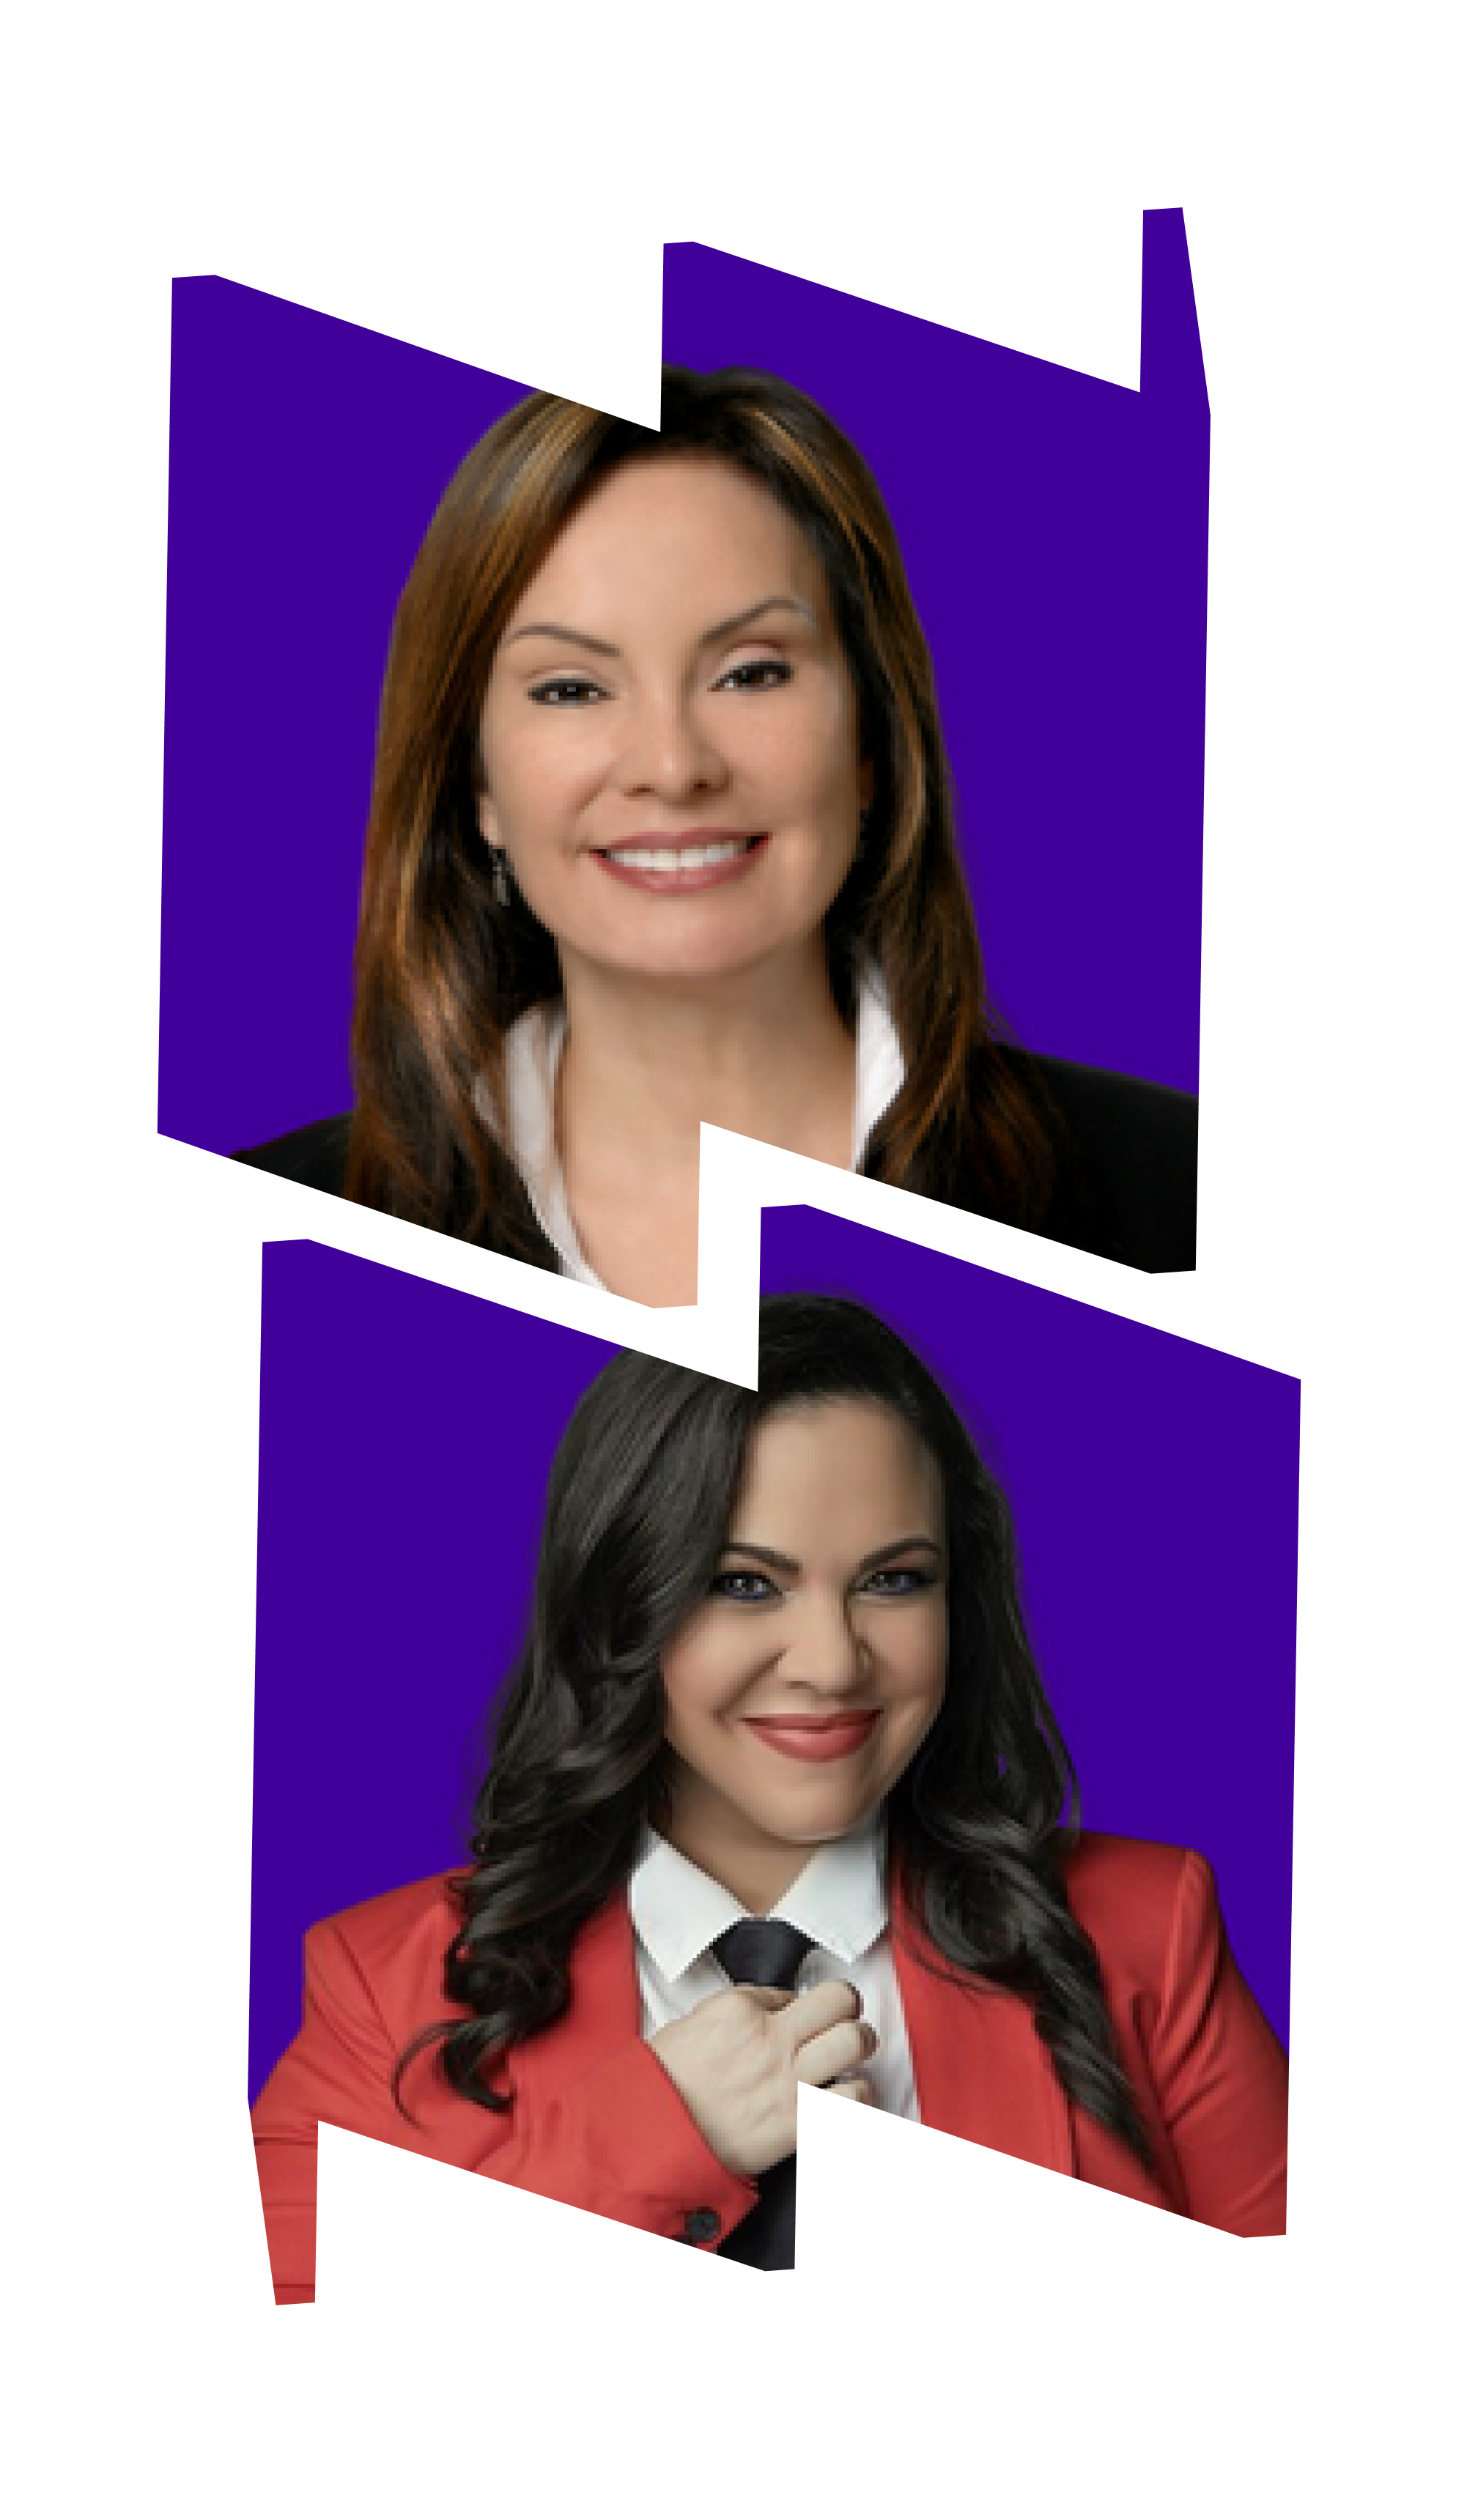 In left "W" frame, headshot of Rosie Rios with purple background; in right "M" frame, headshot of Gloria Calderon Kellett on purple background.